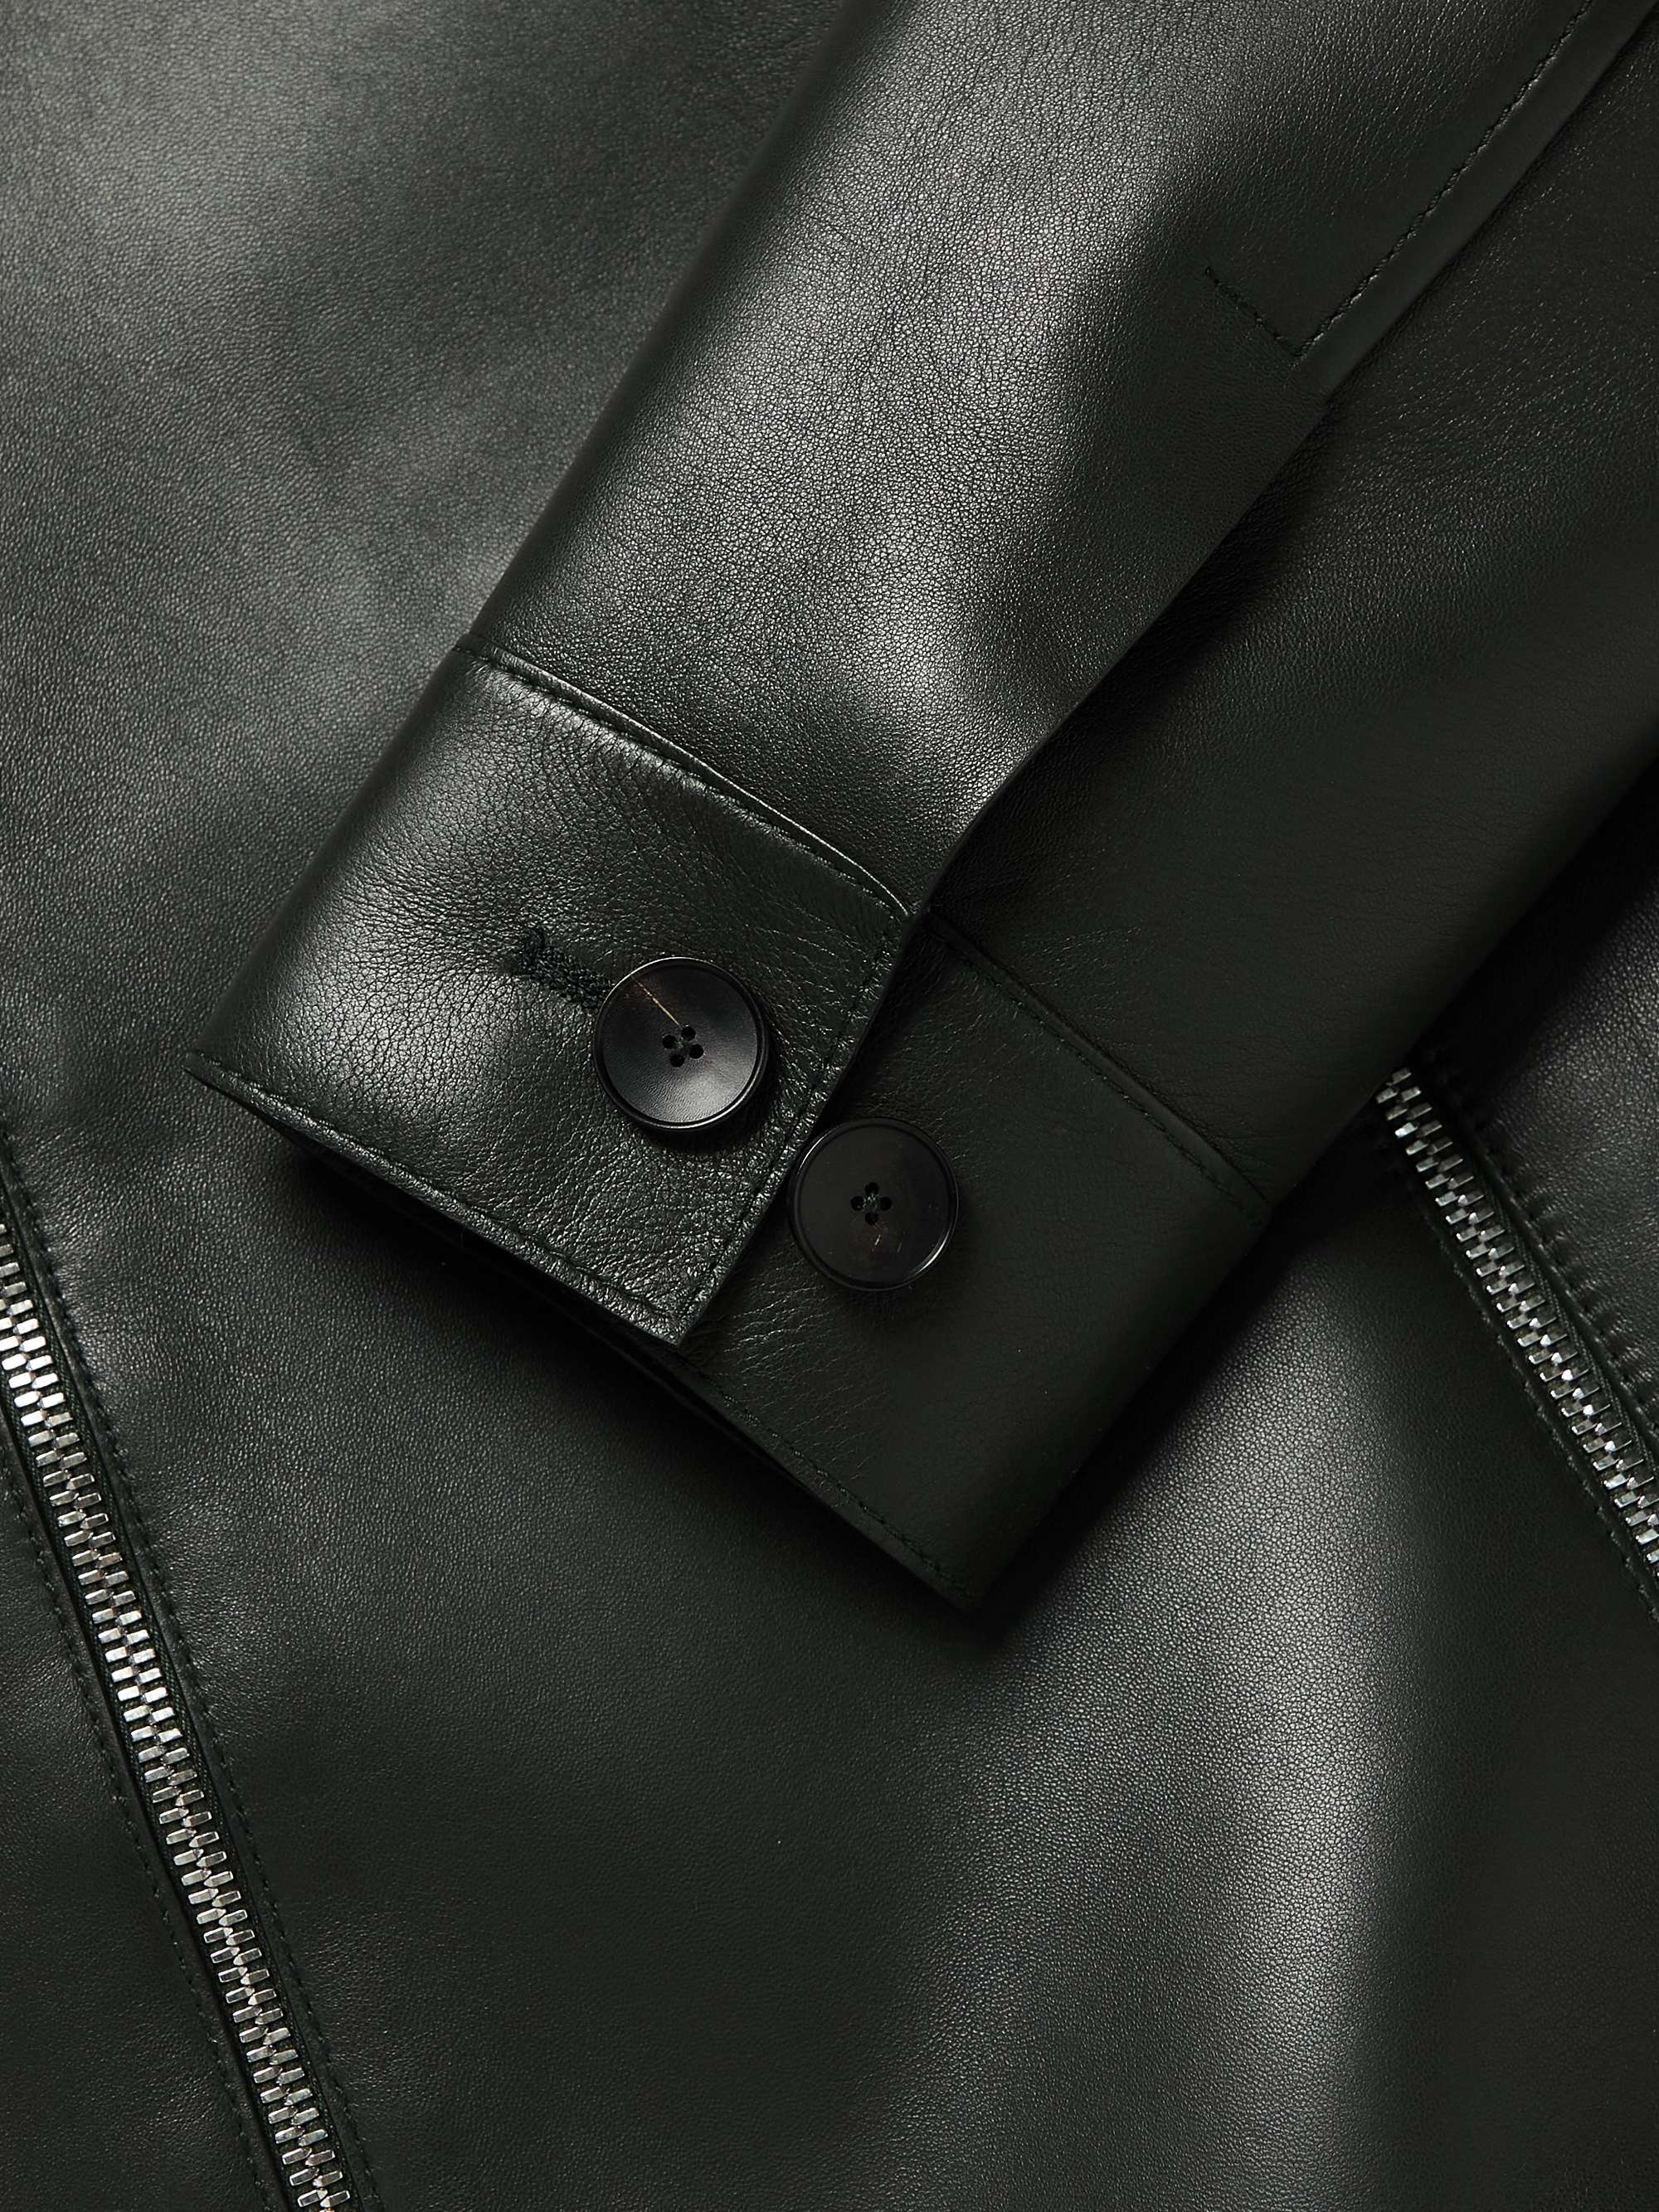 MR P. Leather Blouson Jacket